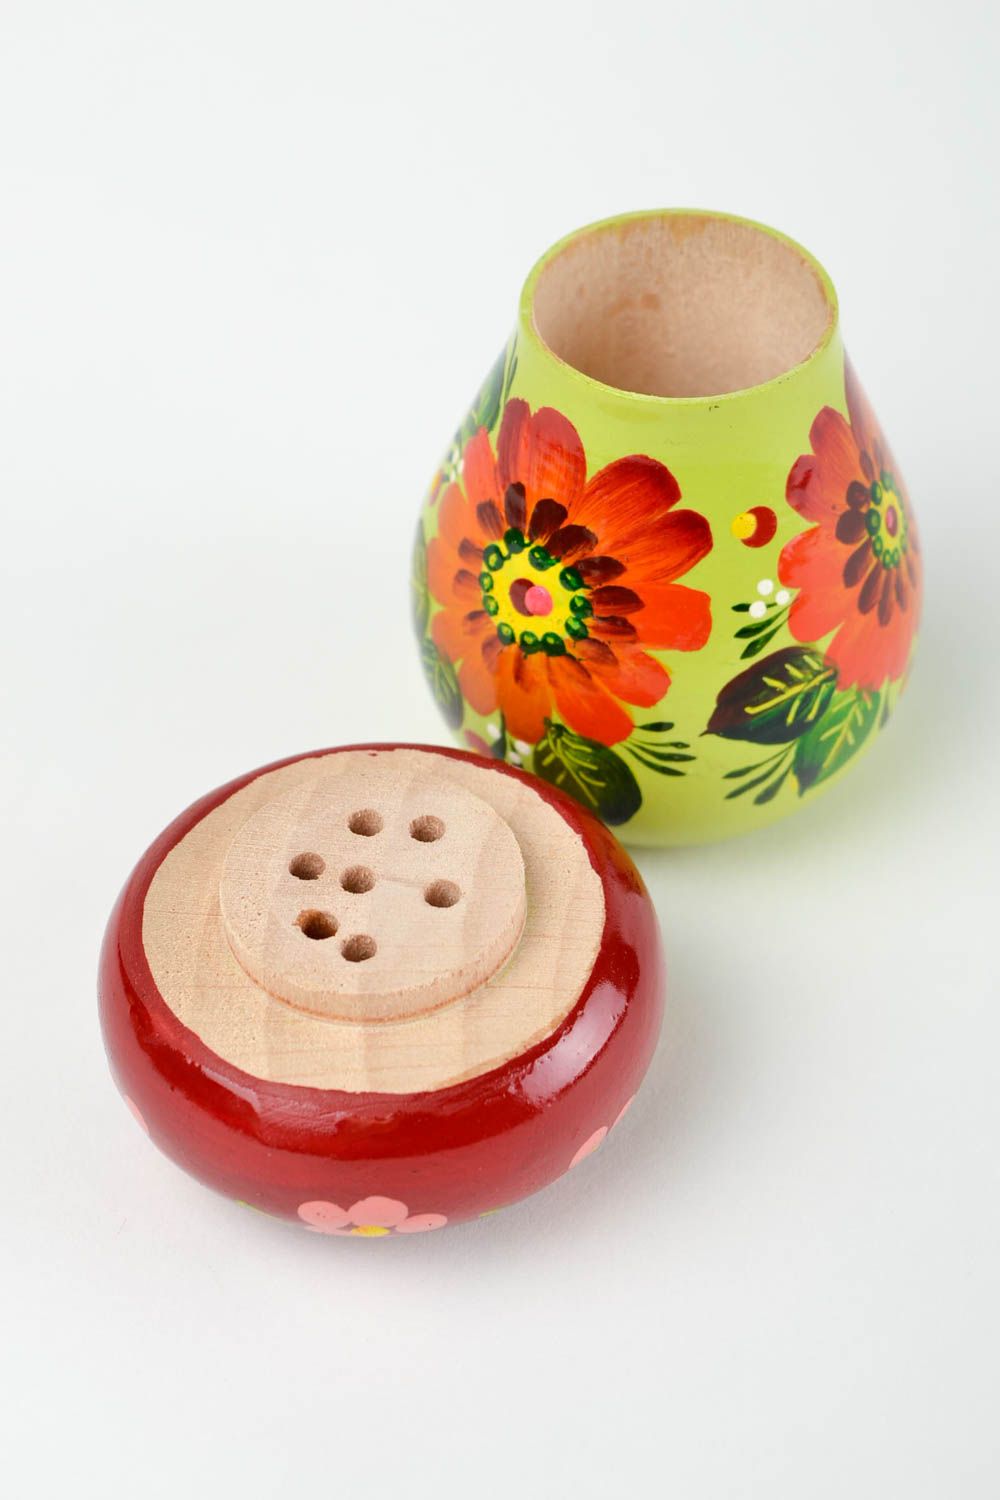 Handmade wooden salt shaker wooden kitchenware table decor ideas small gifts photo 5